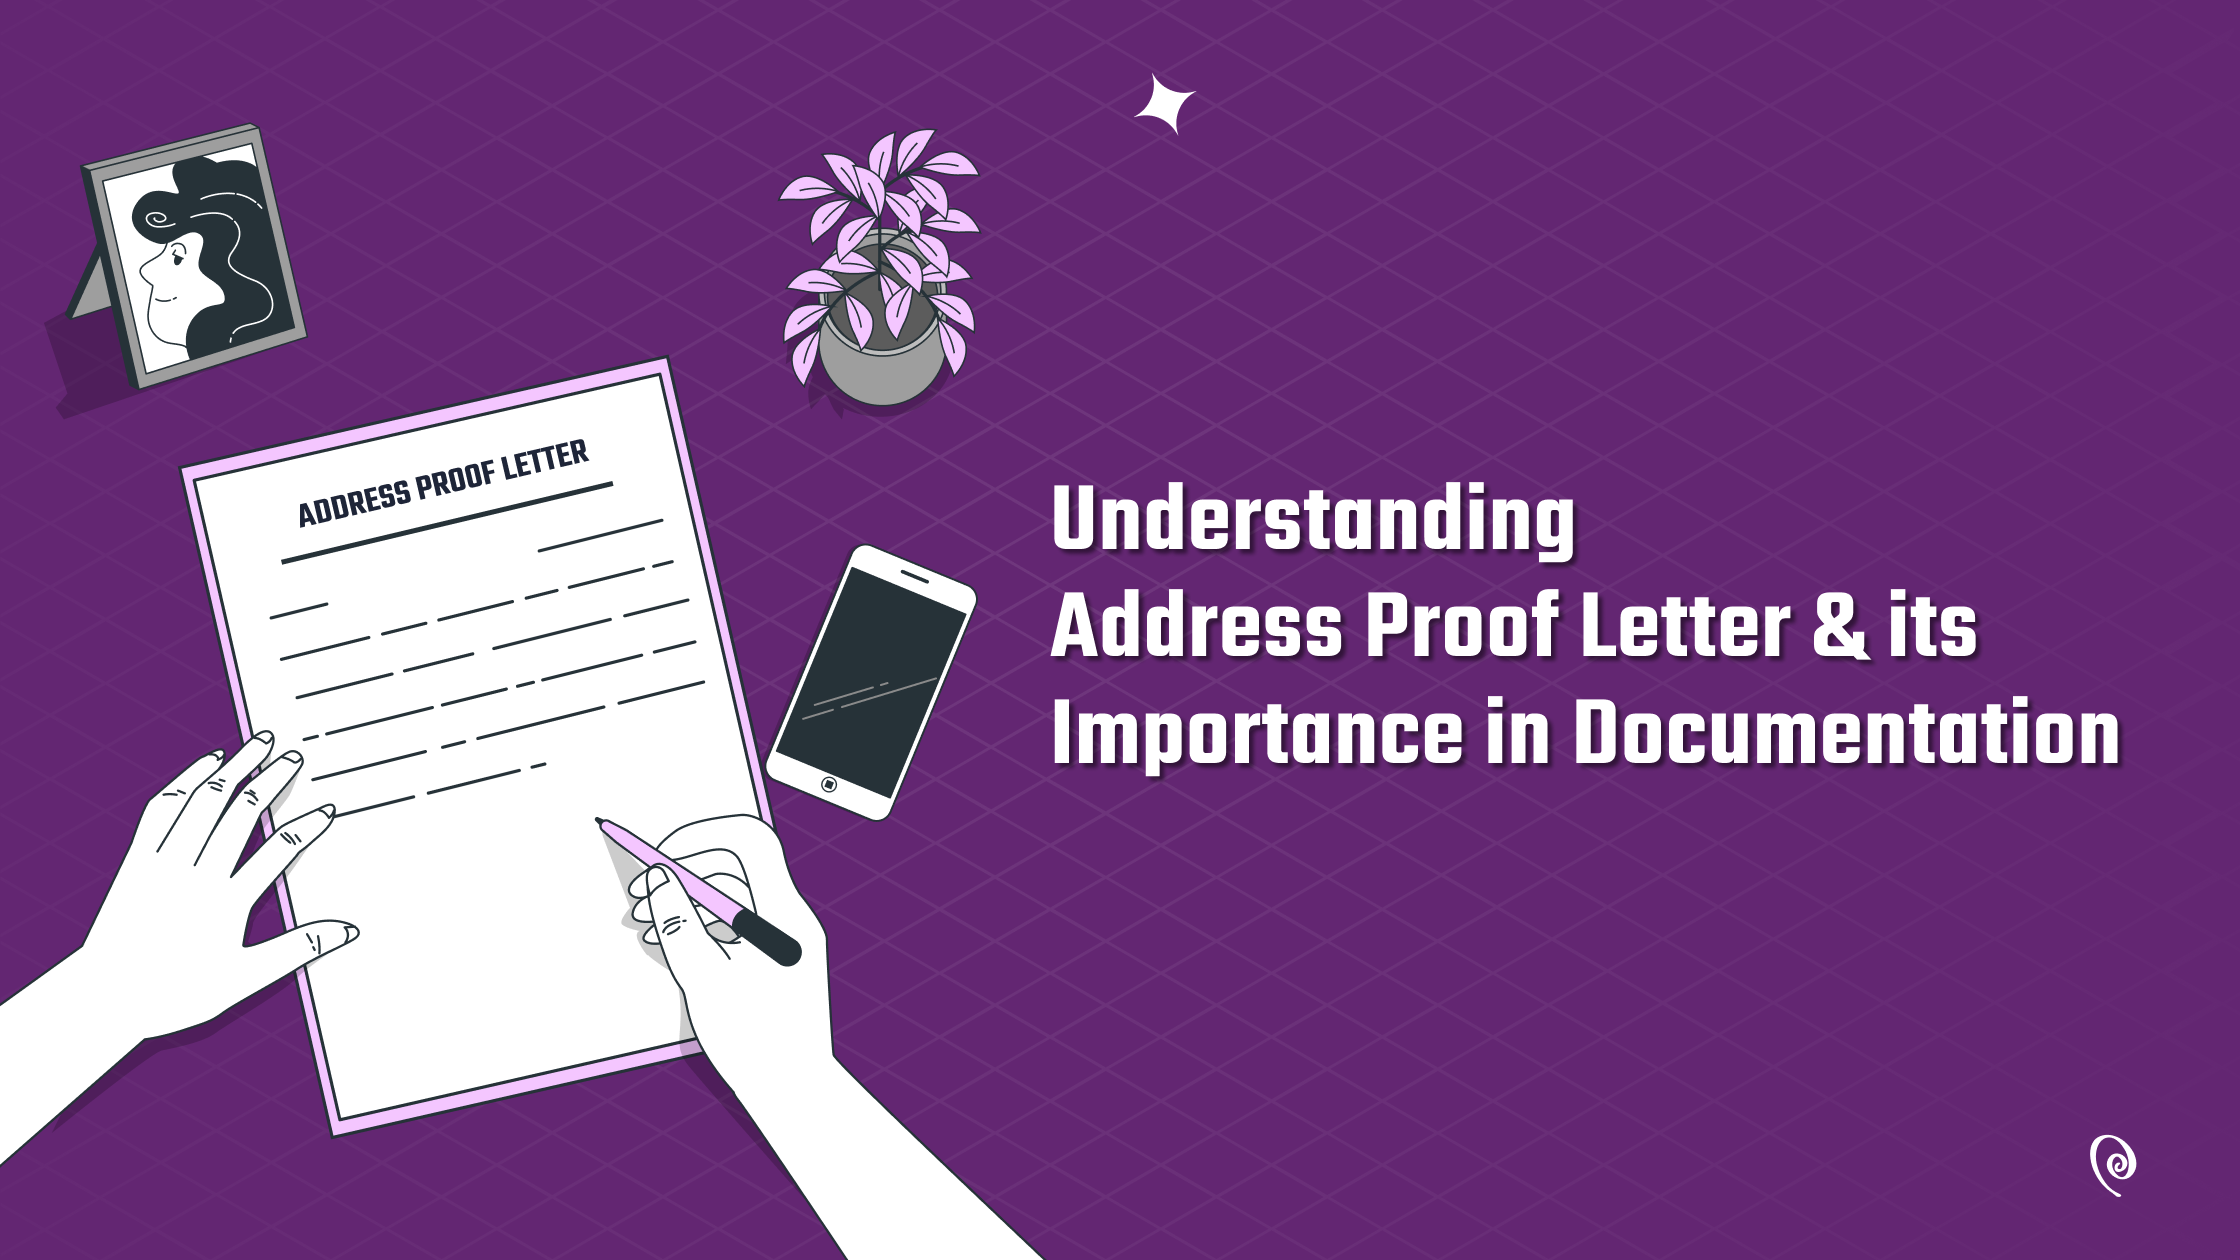 Address Proof Letter